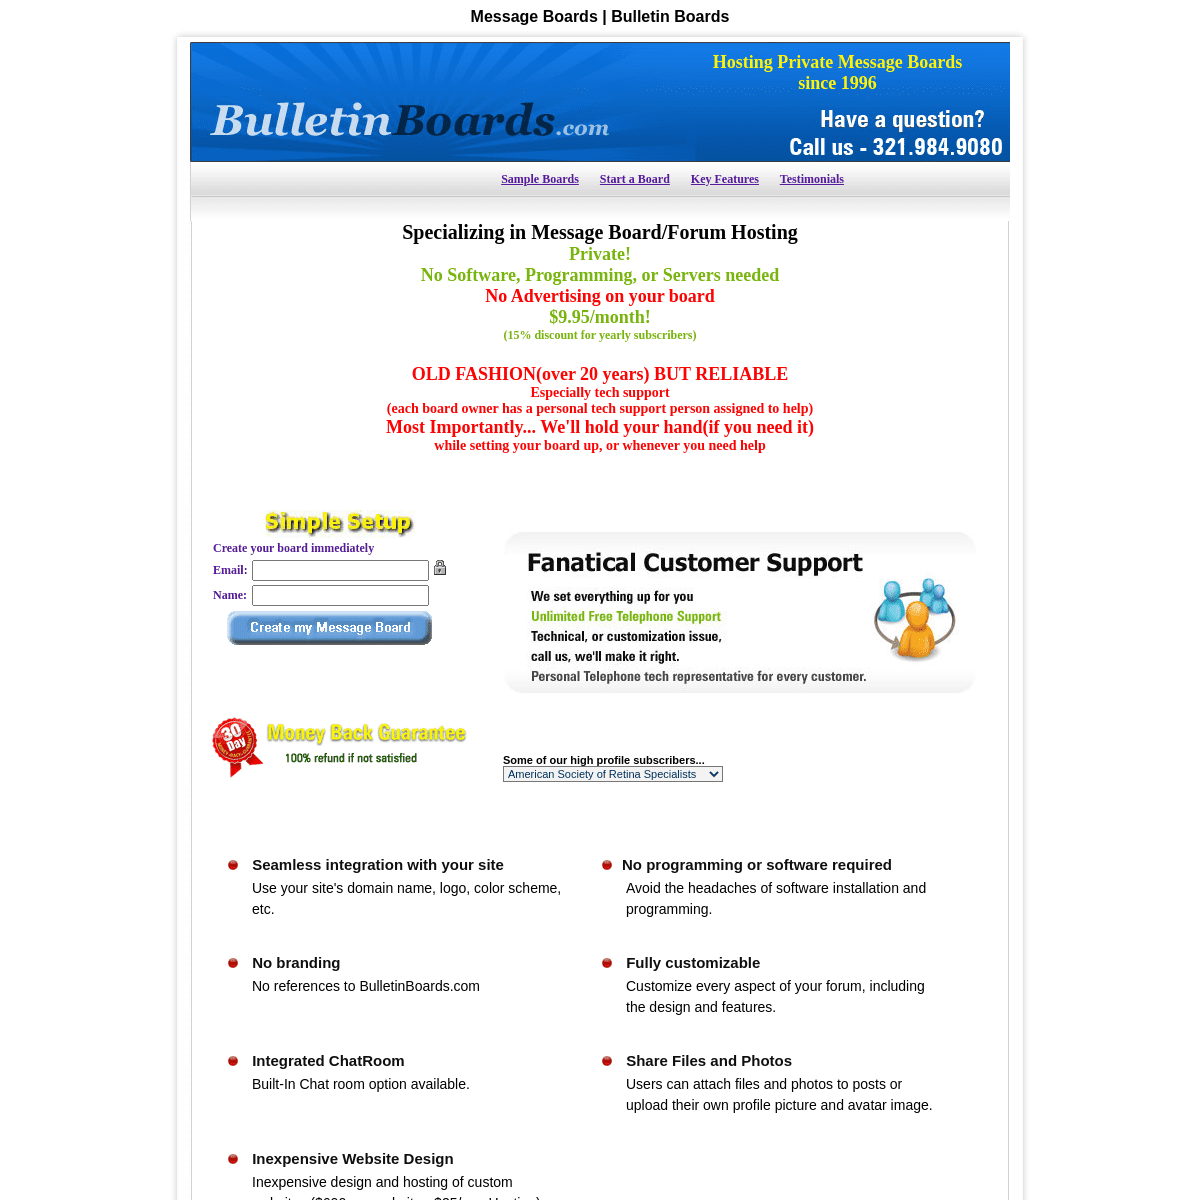 A complete backup of https://bulletinboards.com